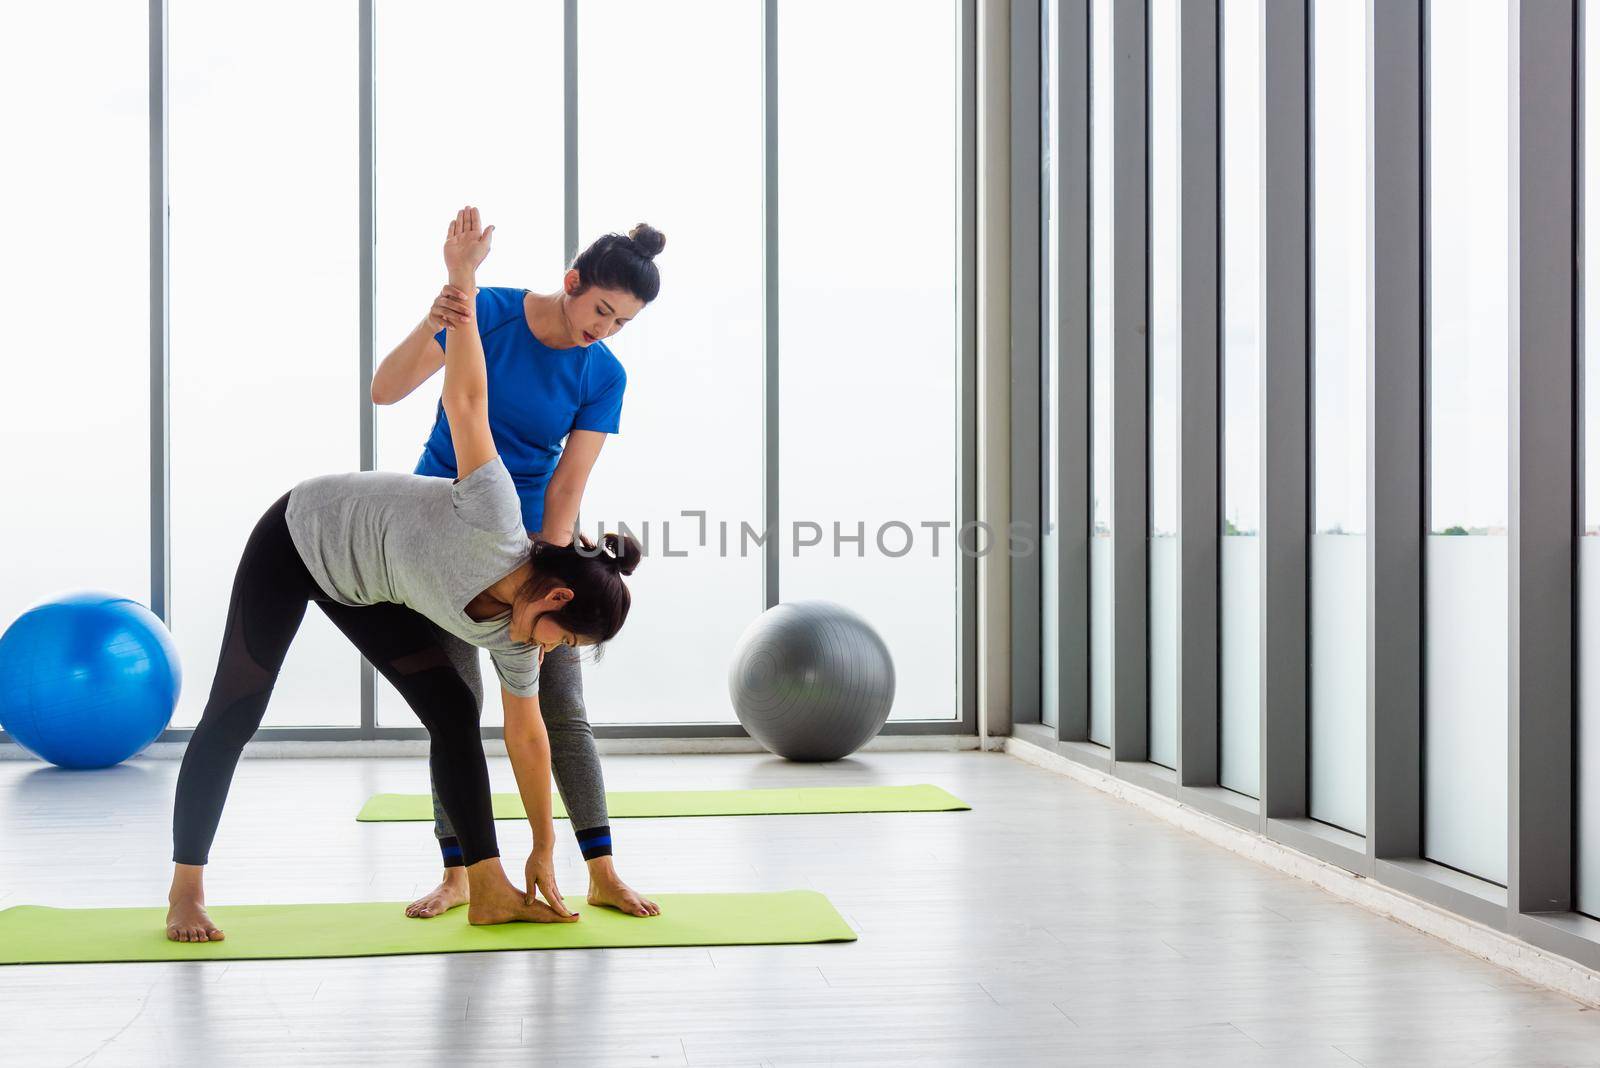 woman teacher teach adult student doing yoga stretching position in studio by Sorapop